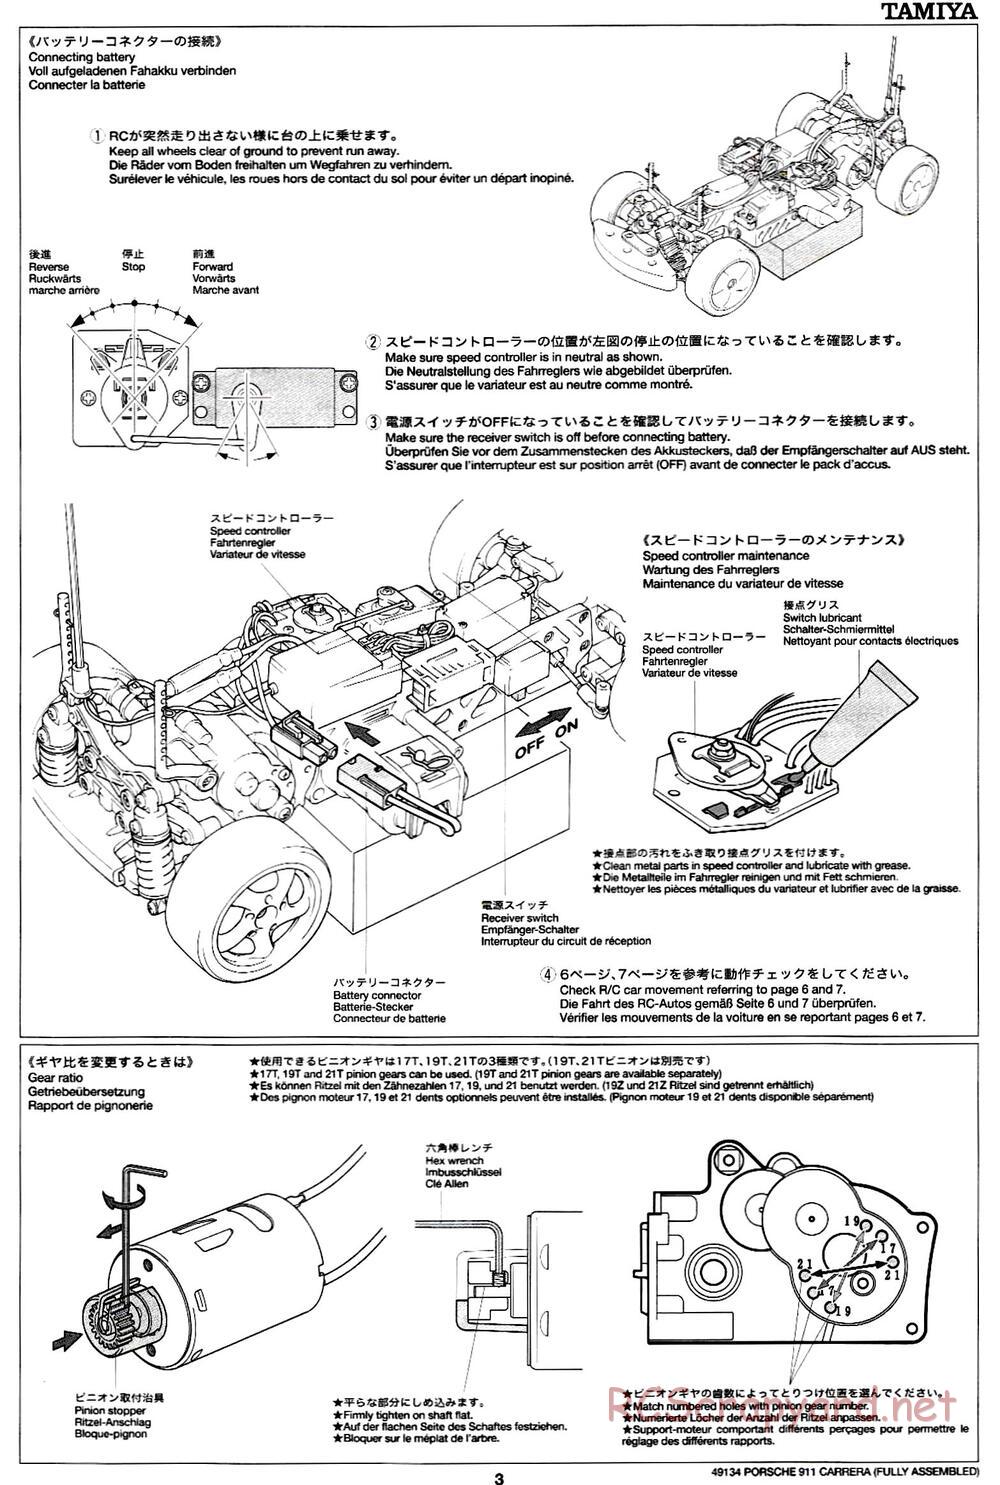 Tamiya - Porsche 911 Carrera - M-04L - Manual - Page 3